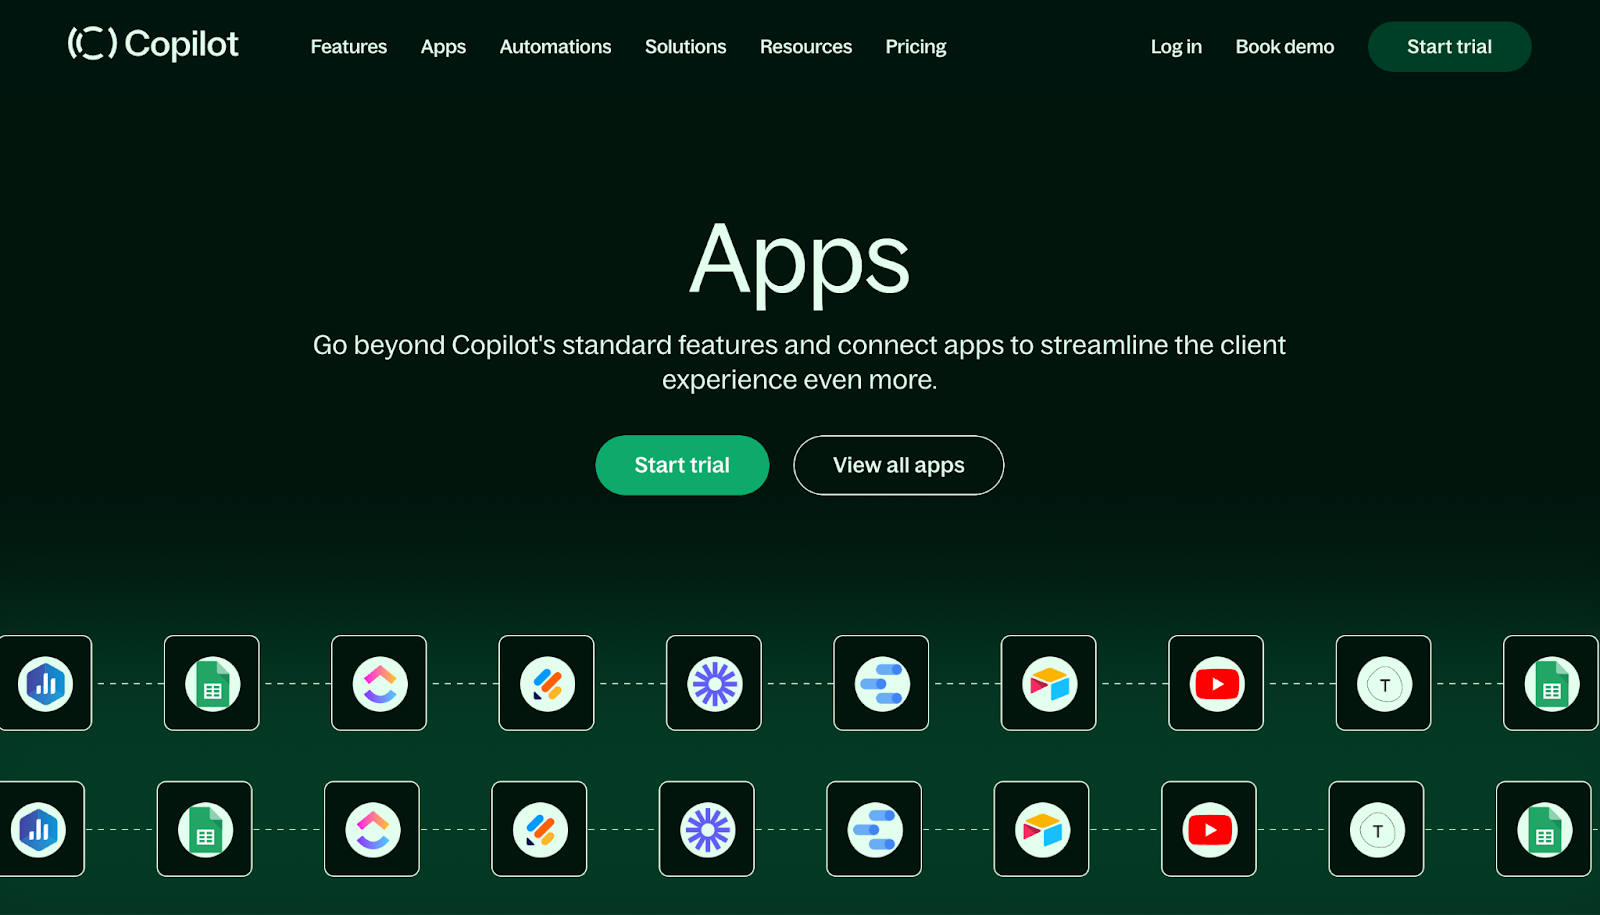 Copilot's App Marketplace